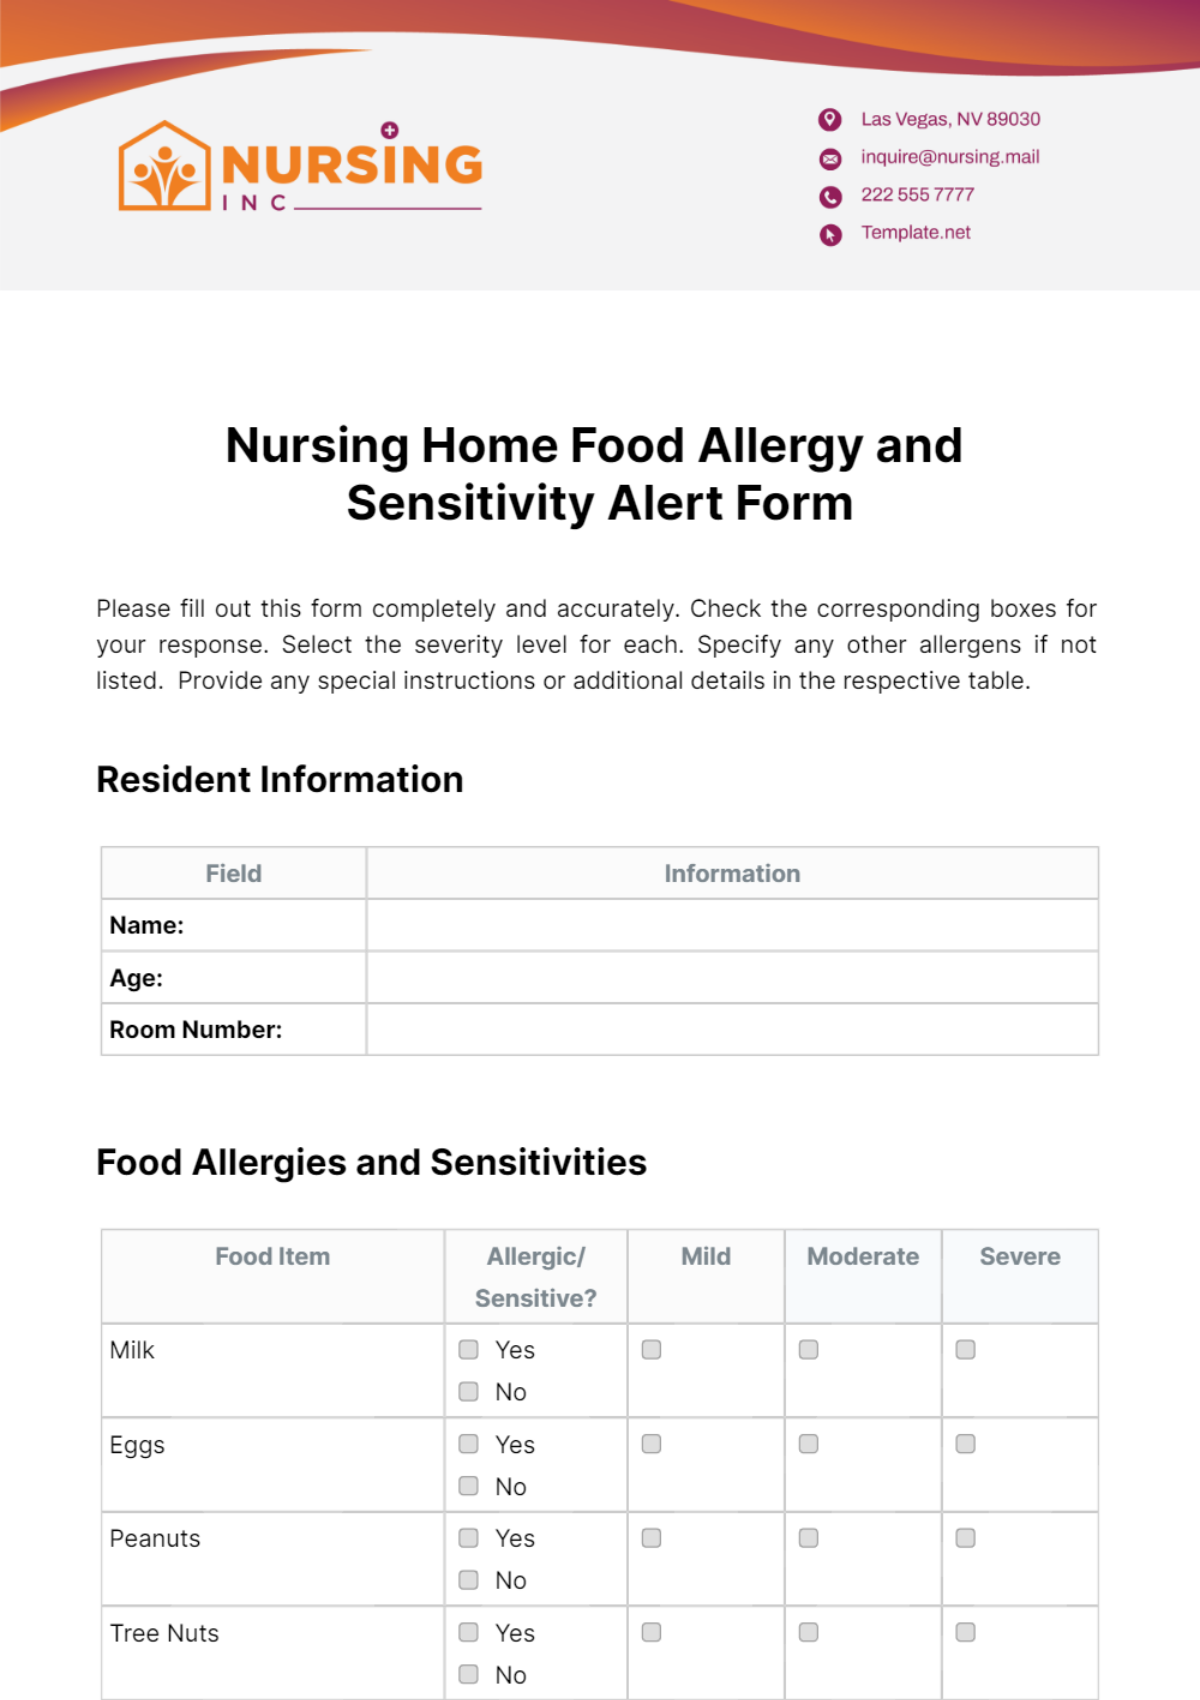 Nursing Home Food Allergy and Sensitivity Alert Form Template